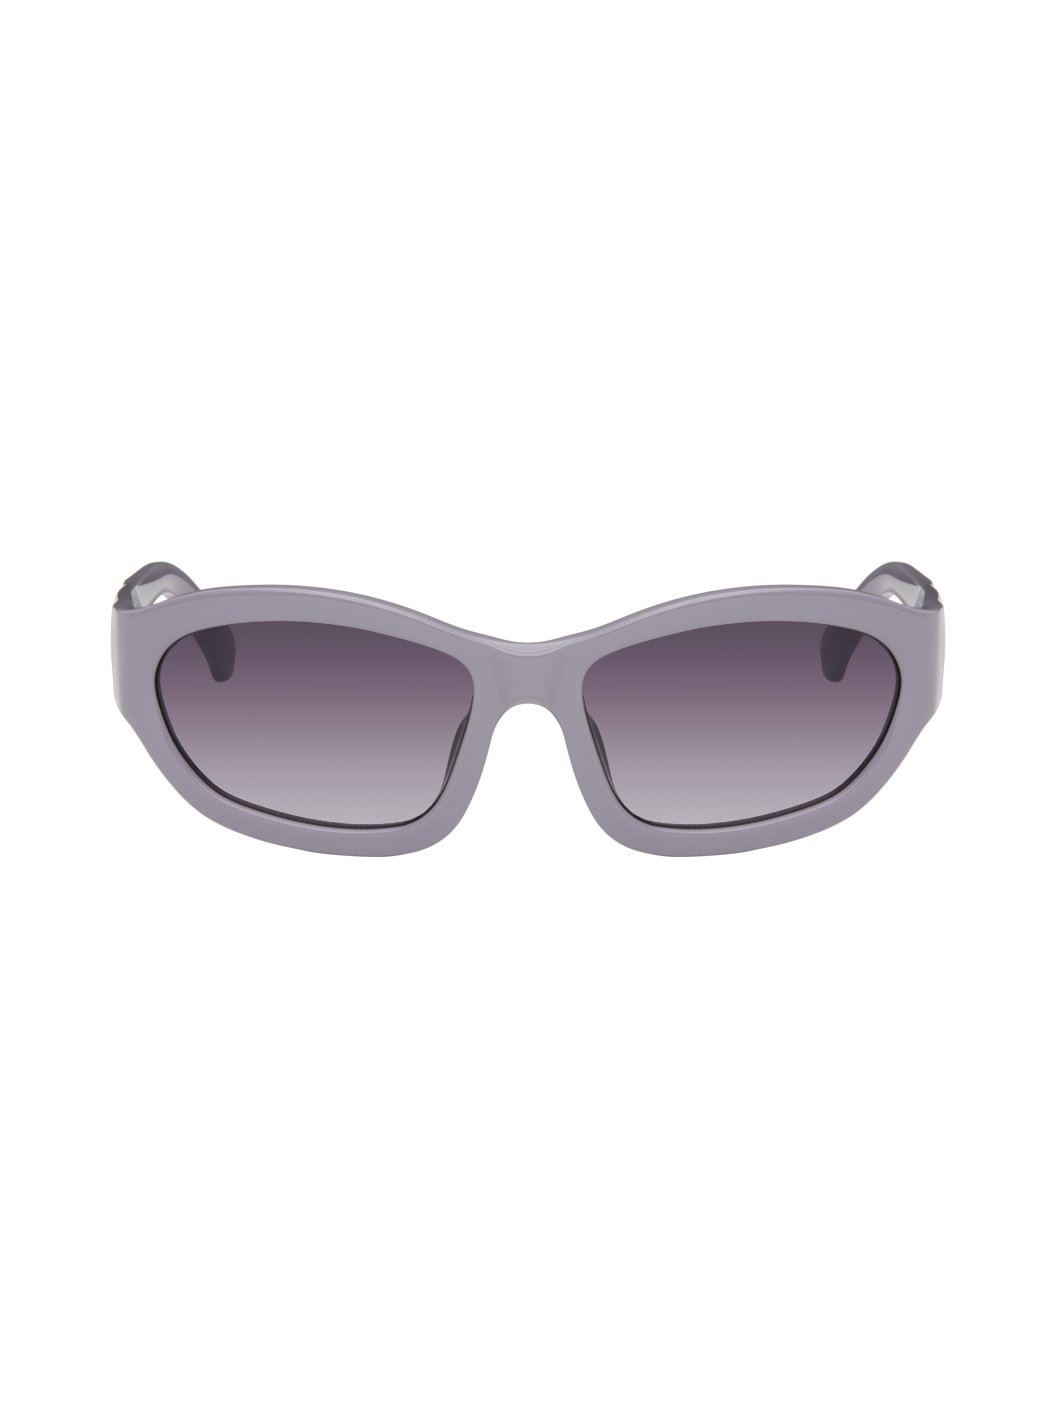 Purple Linda Farrow Edition Goggle Sunglasses - 1